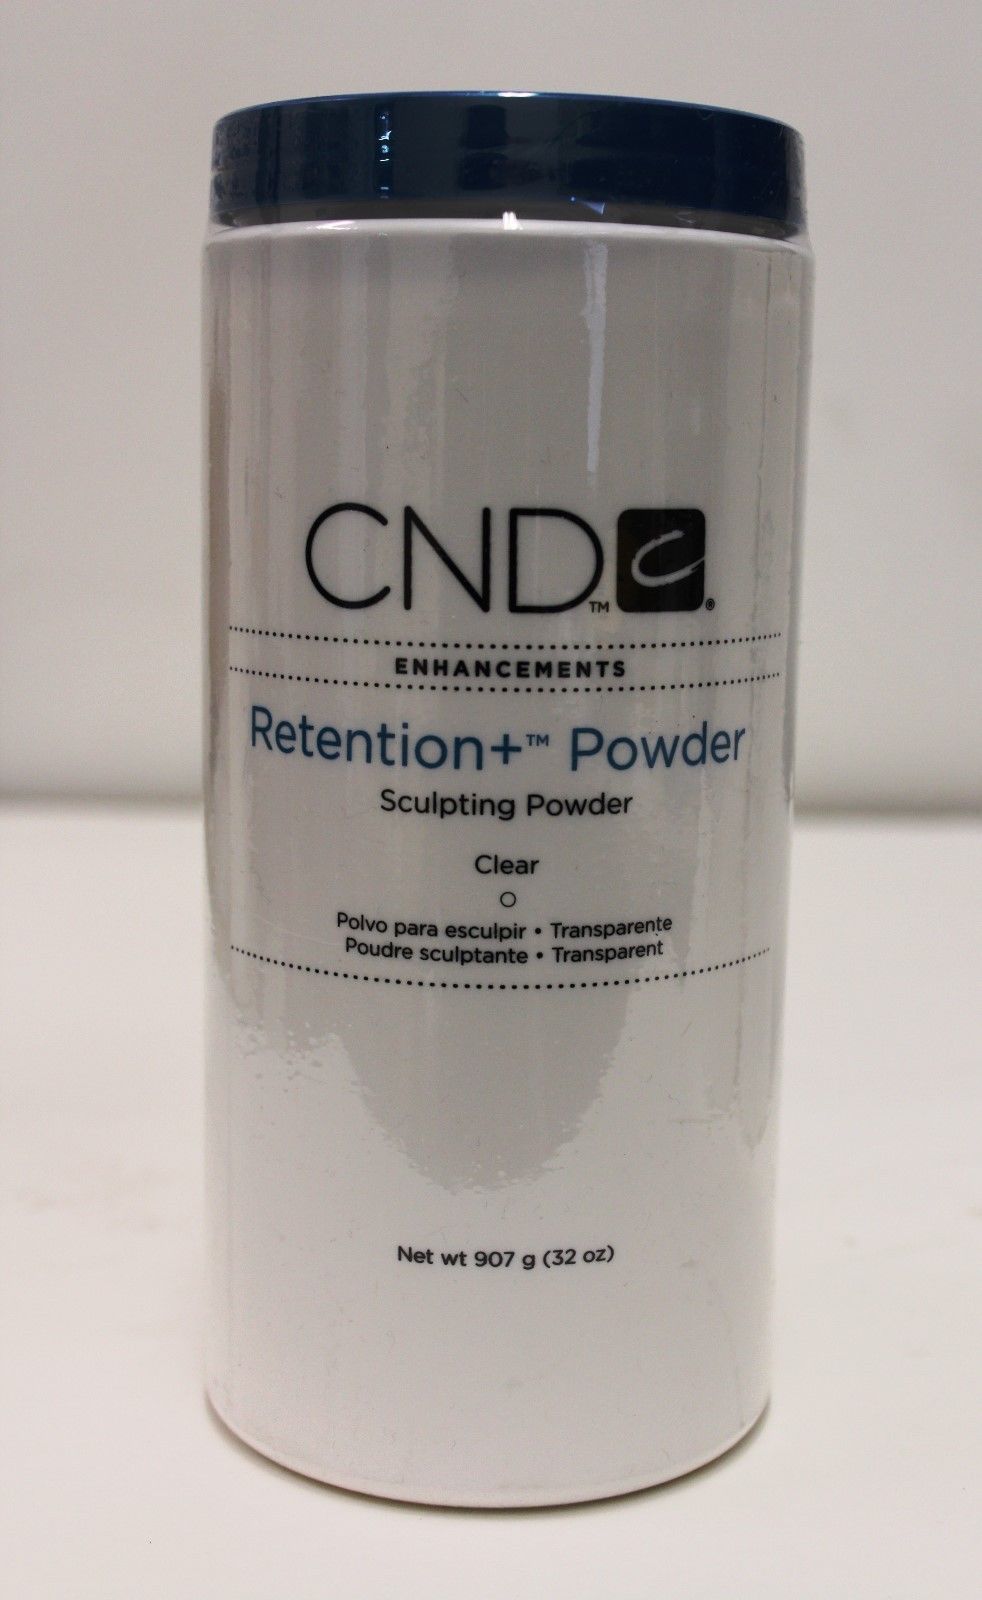 CND - Nail Manicure Perfect Color Sculpting White Powder 32oz/907g